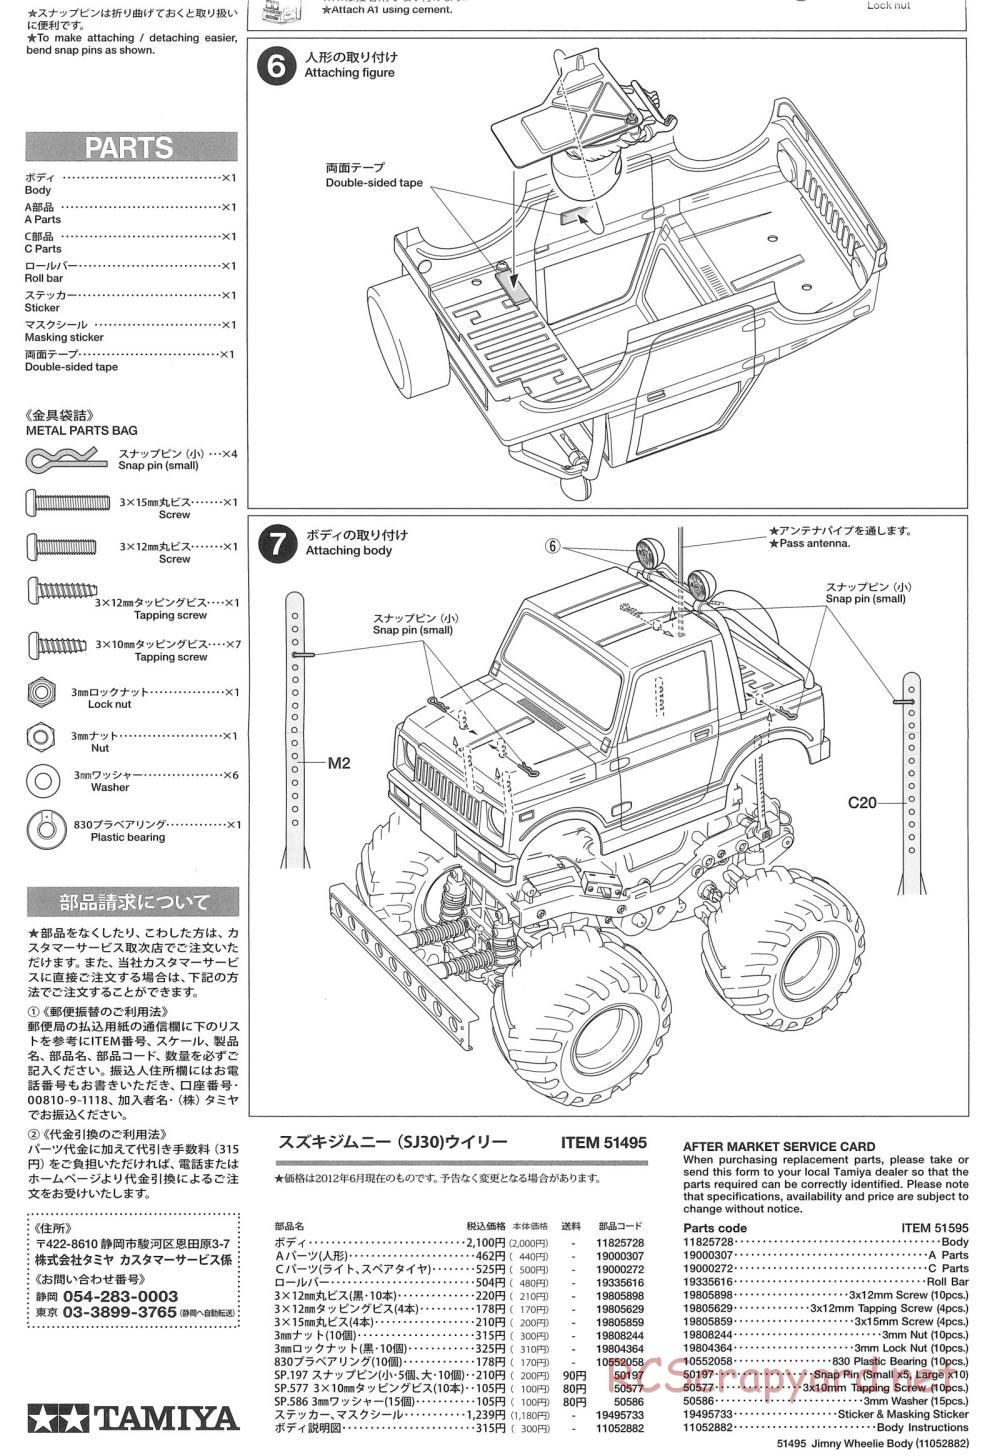 Tamiya - Suzuki Jimny (SJ30) Wheelie - WR-02 Chassis - Manual - Page 26